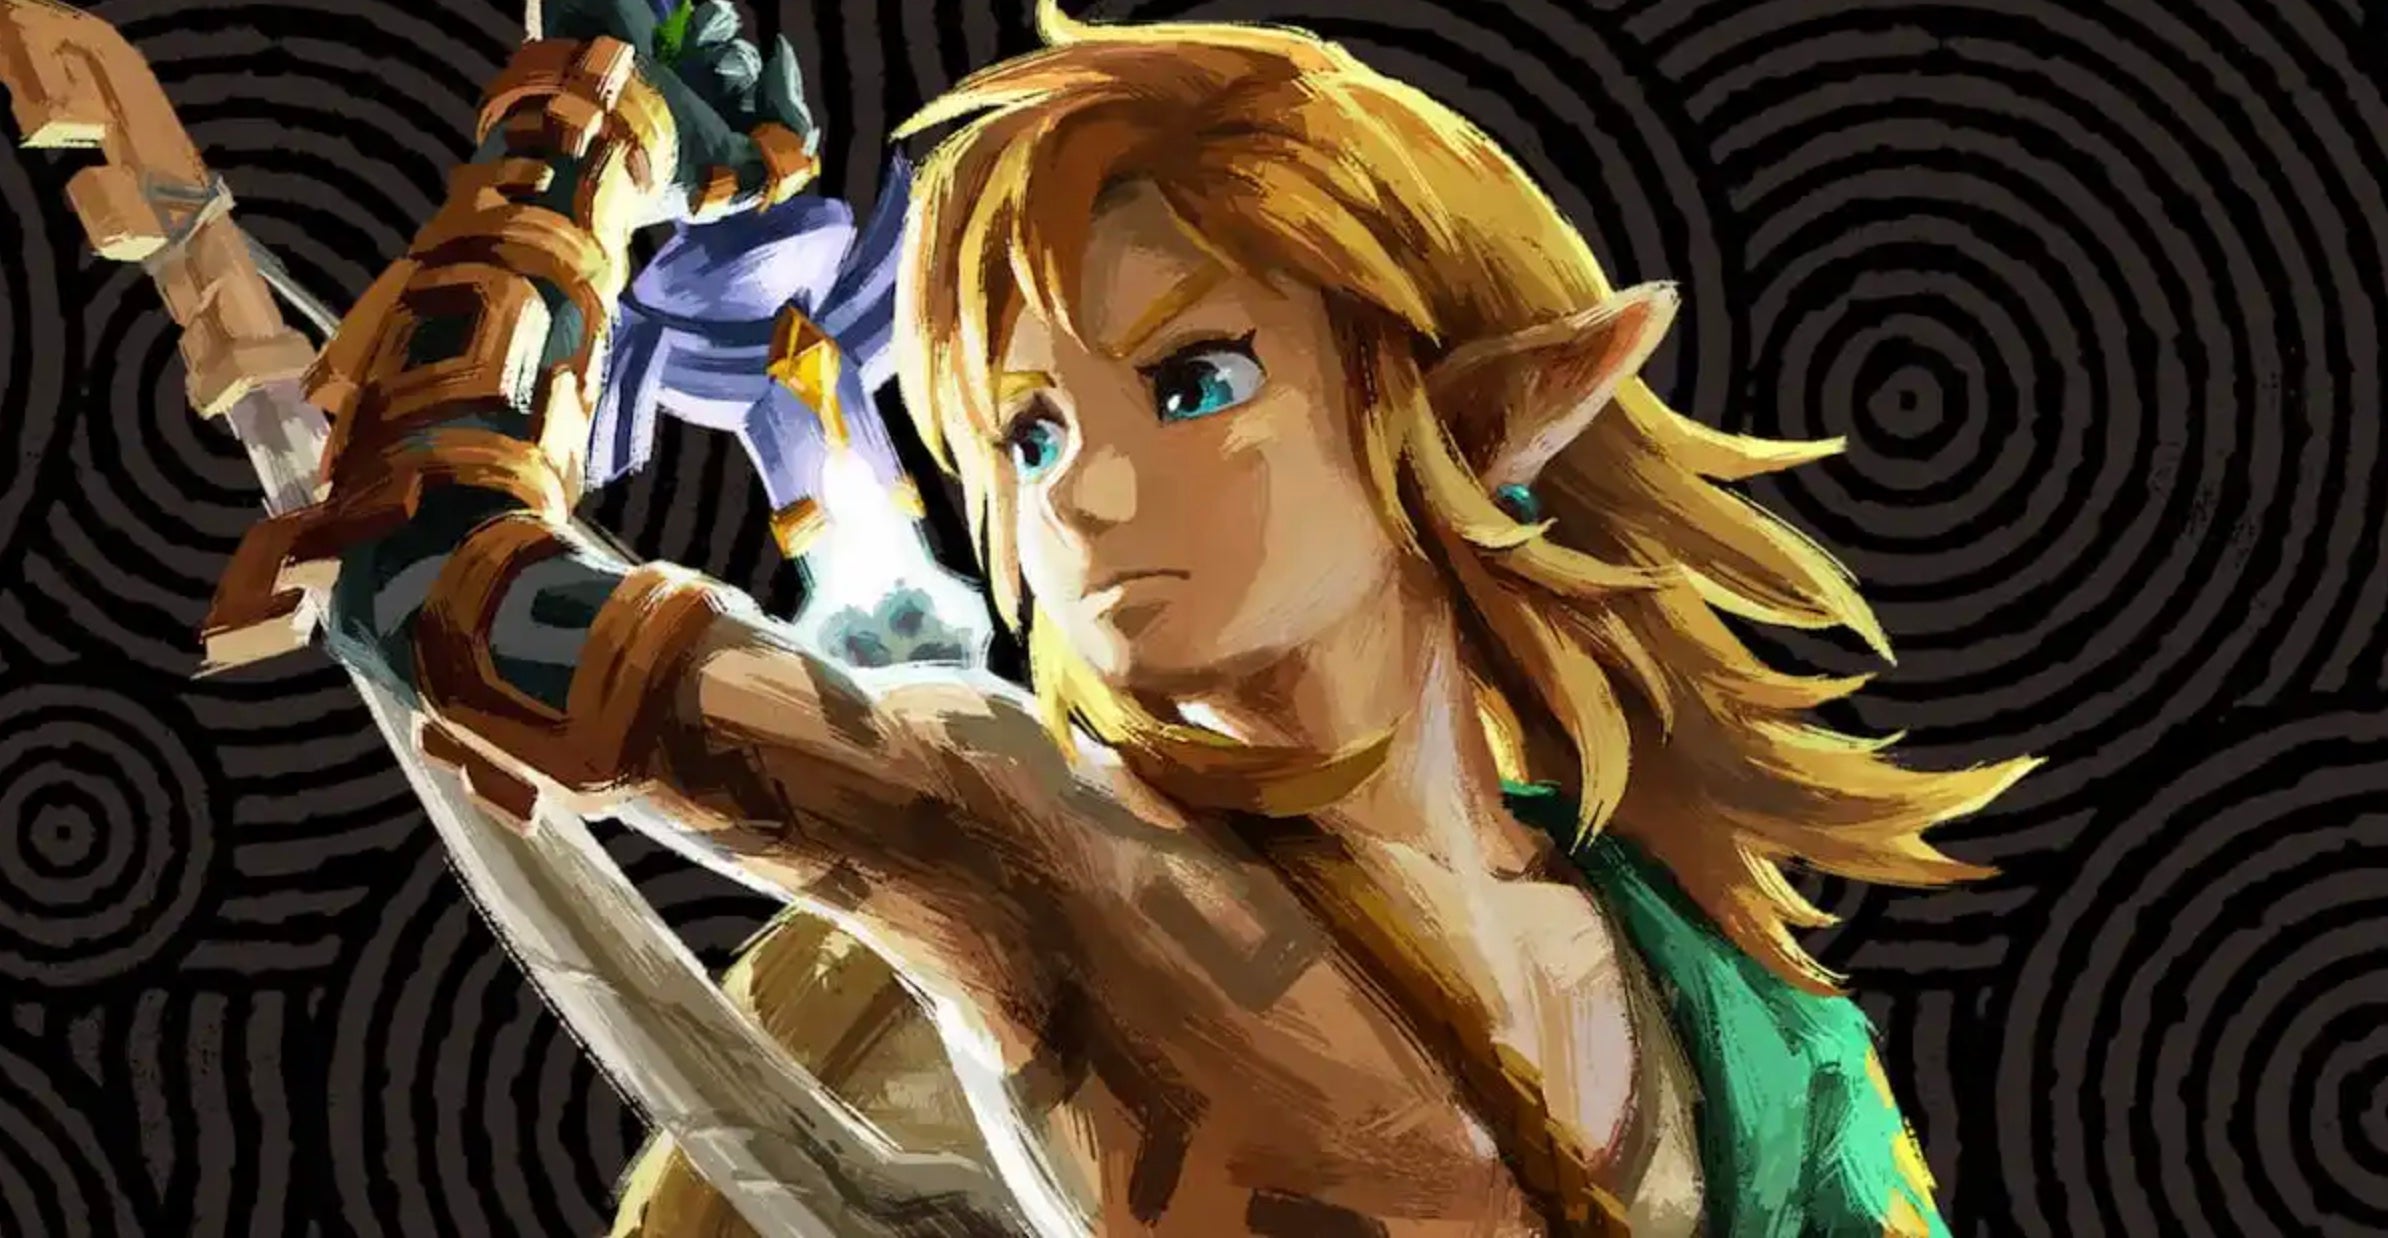 An artist's rendering of Link as he appears in Tears of the Kingdom.